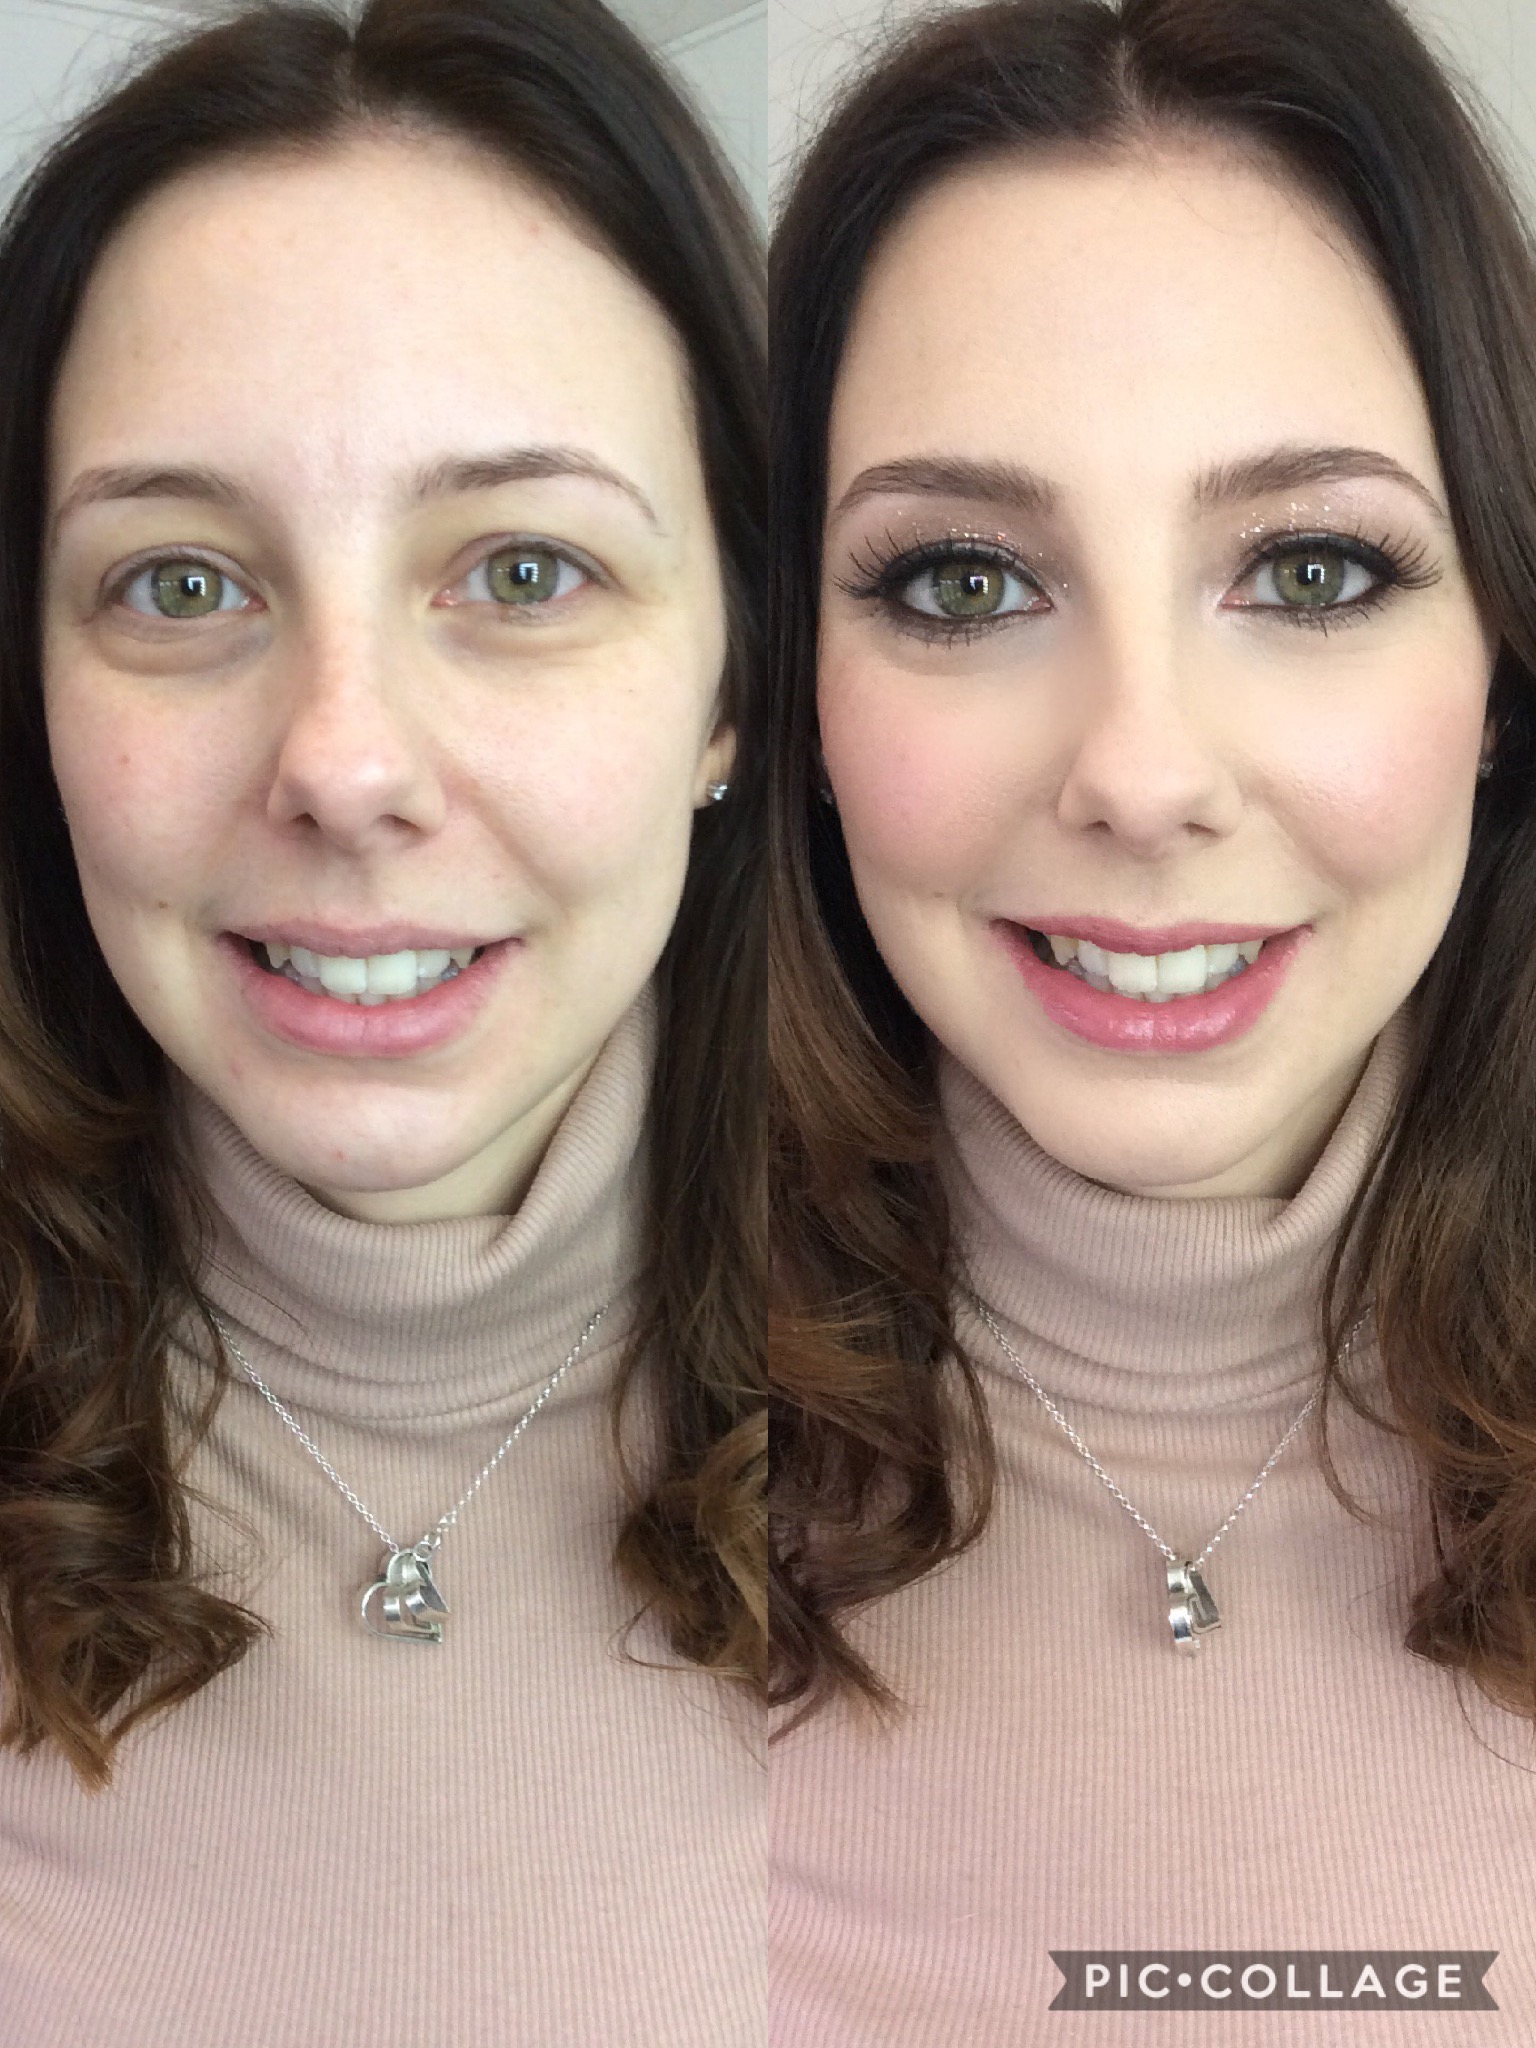 Kate - before and after make-up. Make-up by Tina Brocklebank Make-up artist.